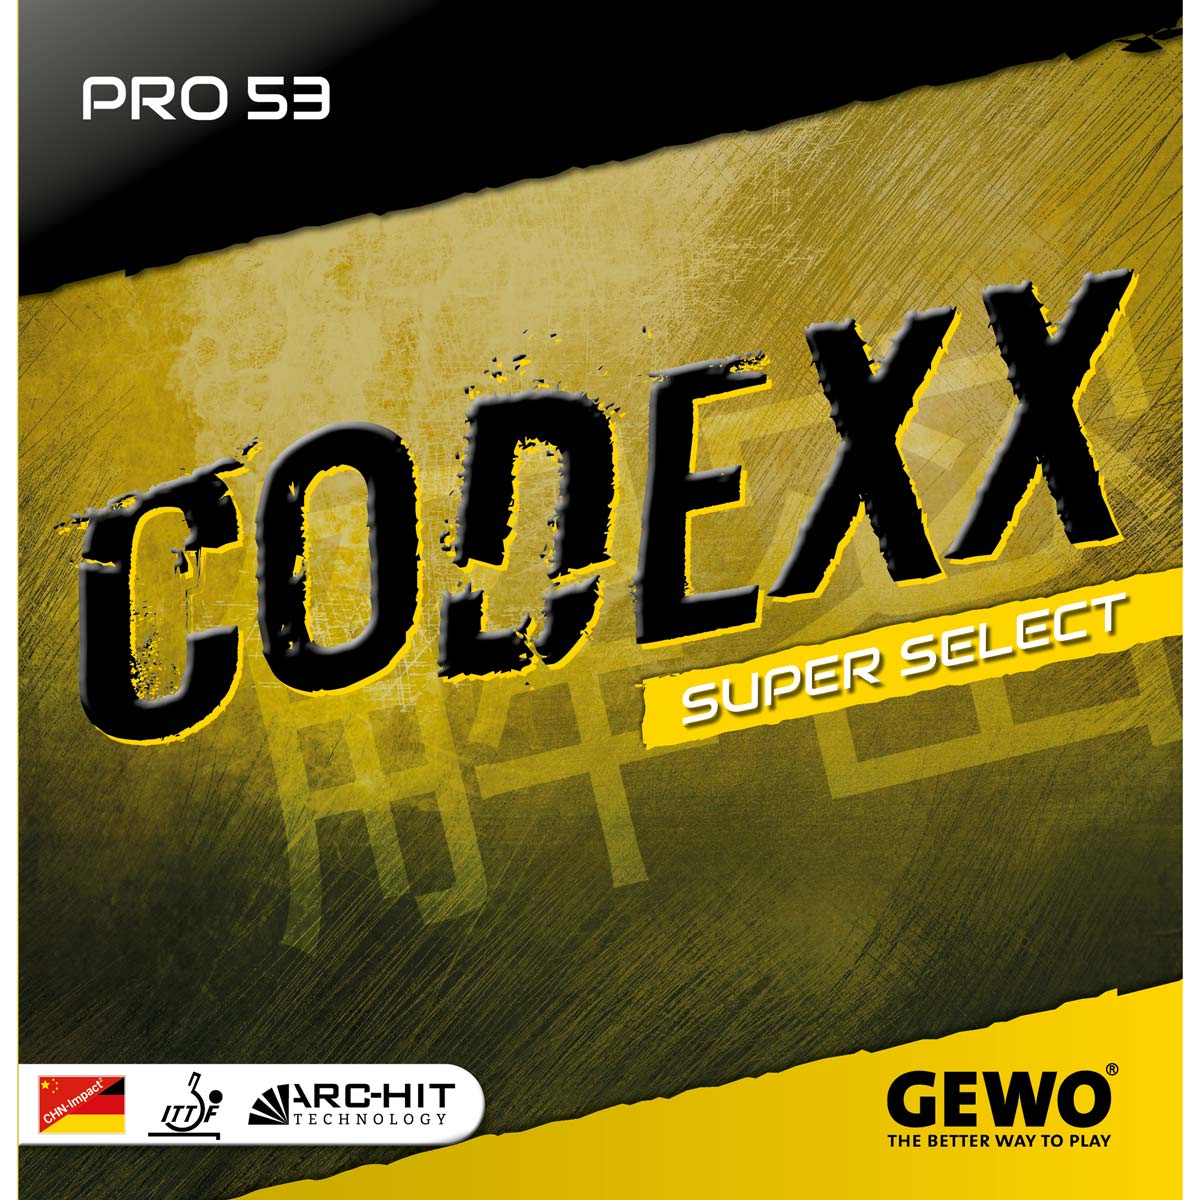 GEWO Rubber Codexx Pro 53 SuperSelect